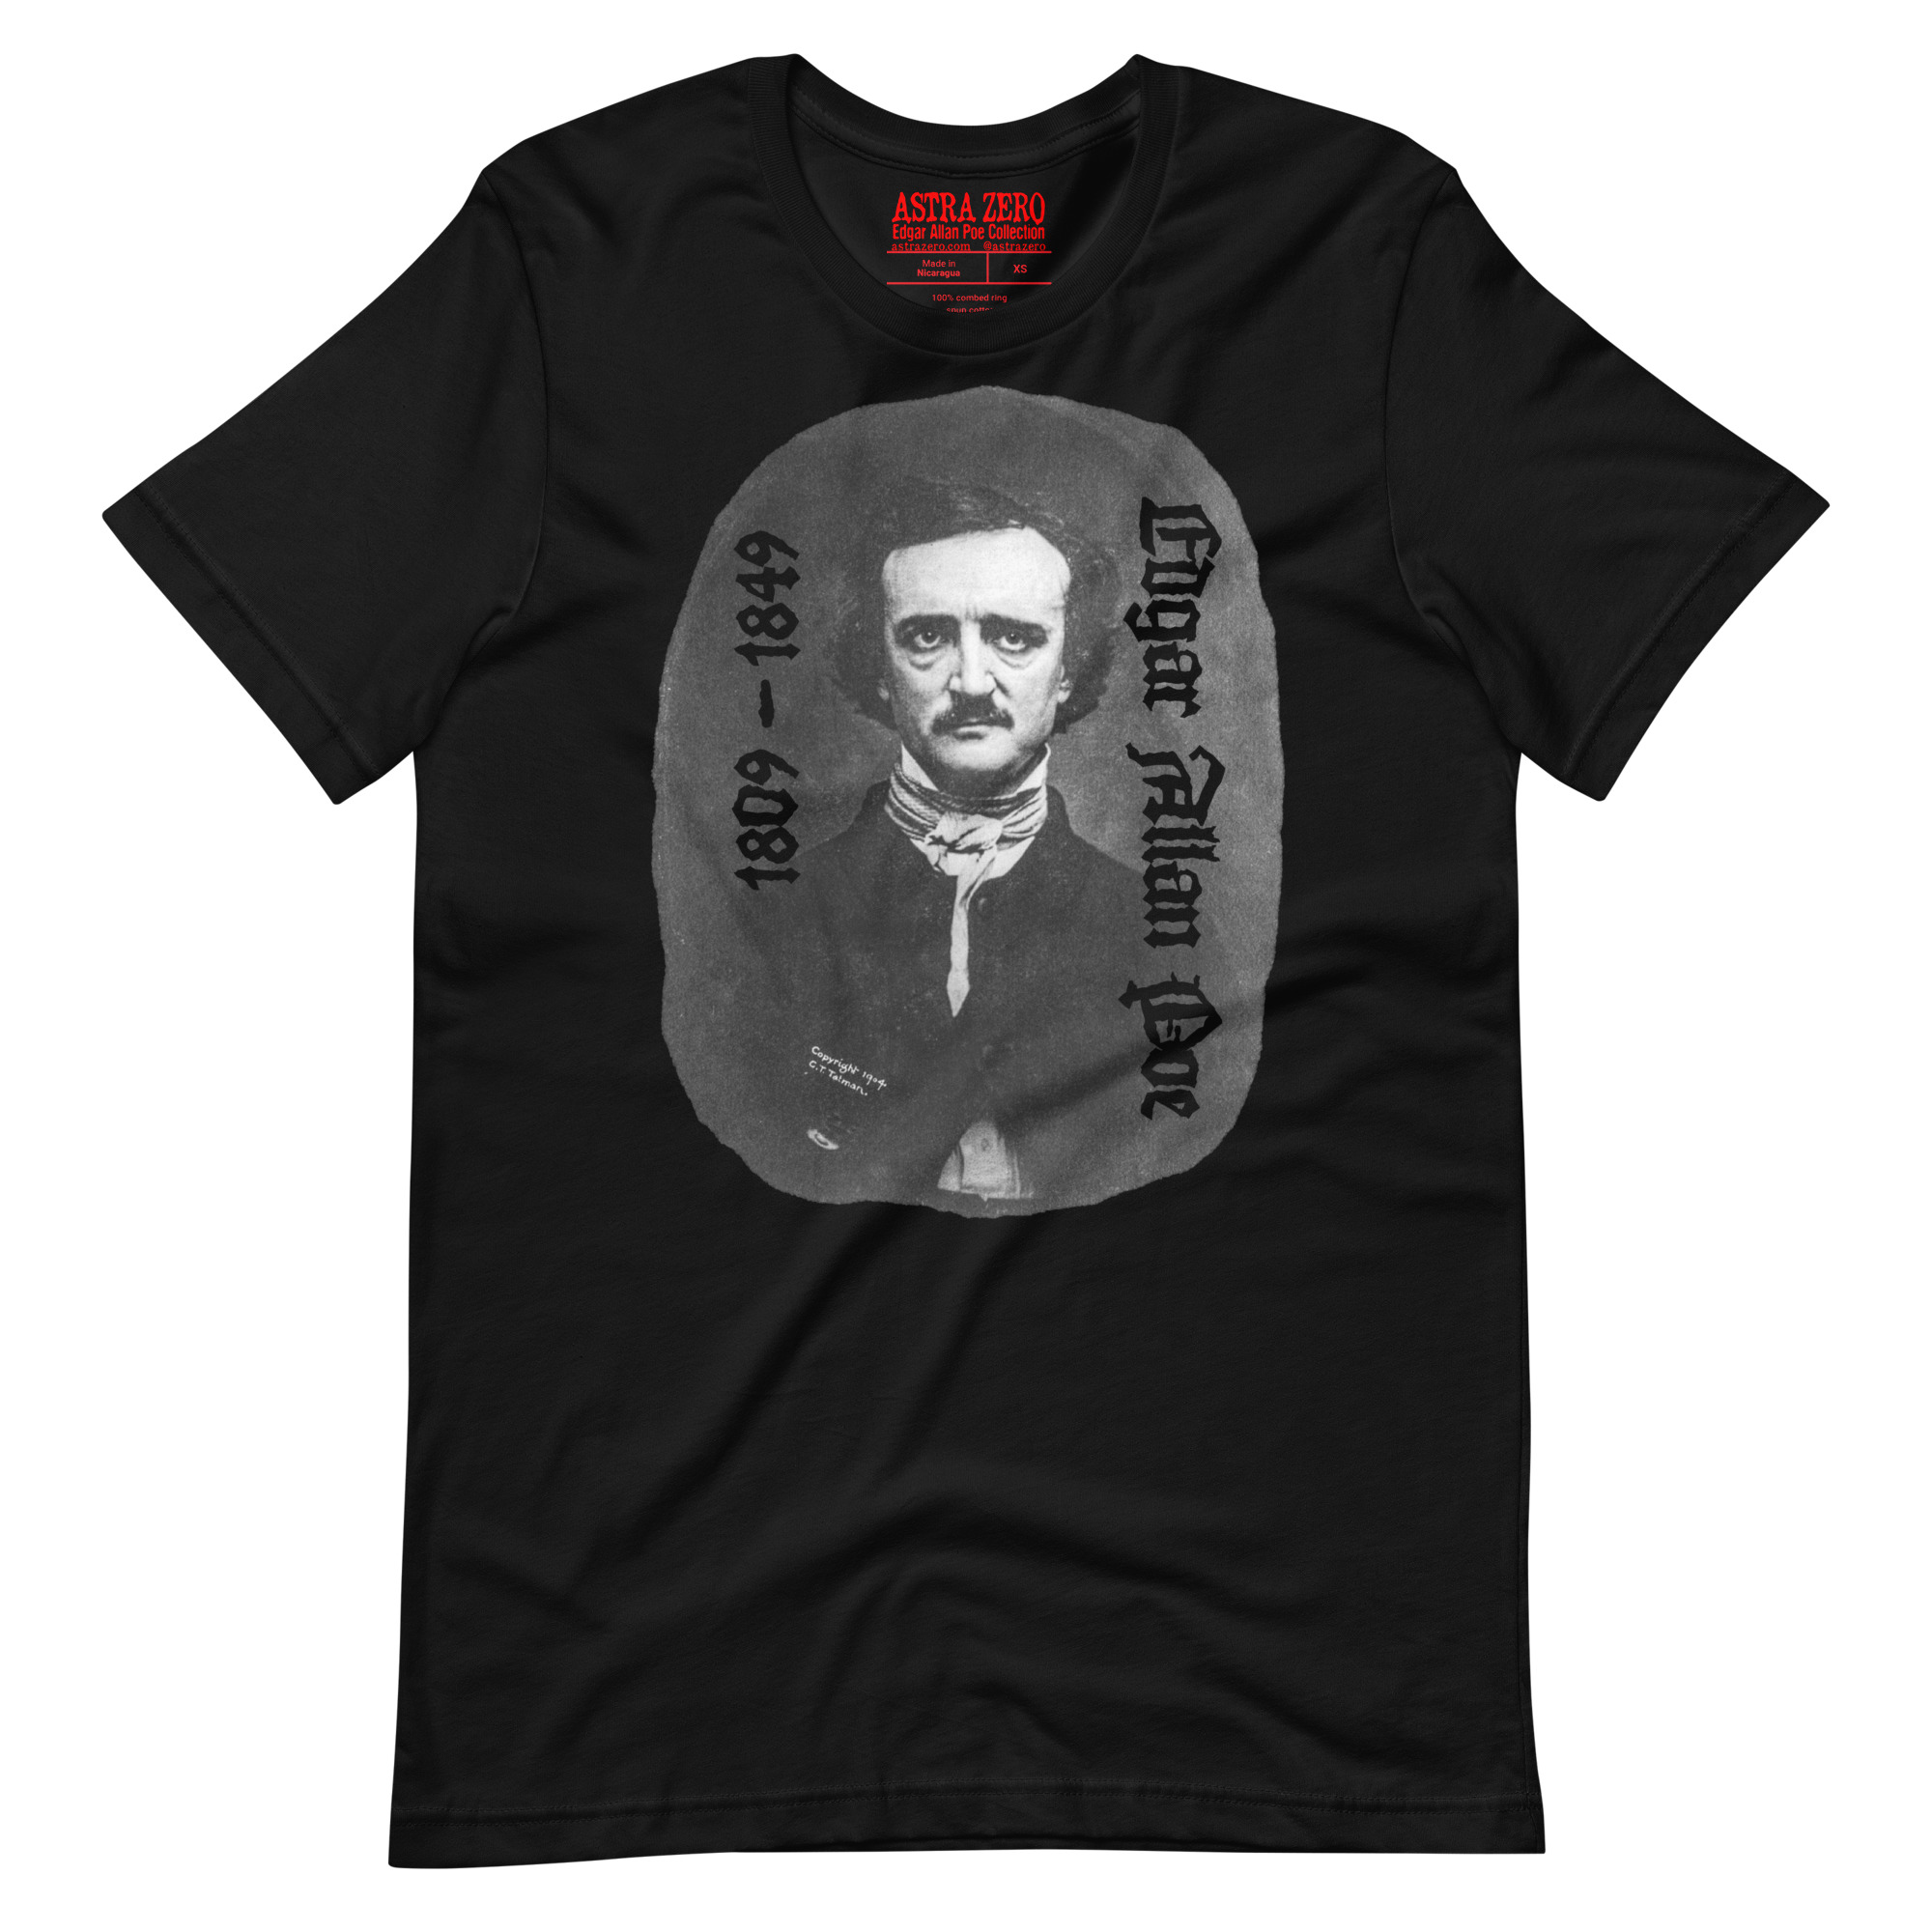 Featured image for “Edgar Allan Poe Portrait - Unisex t-shirt”